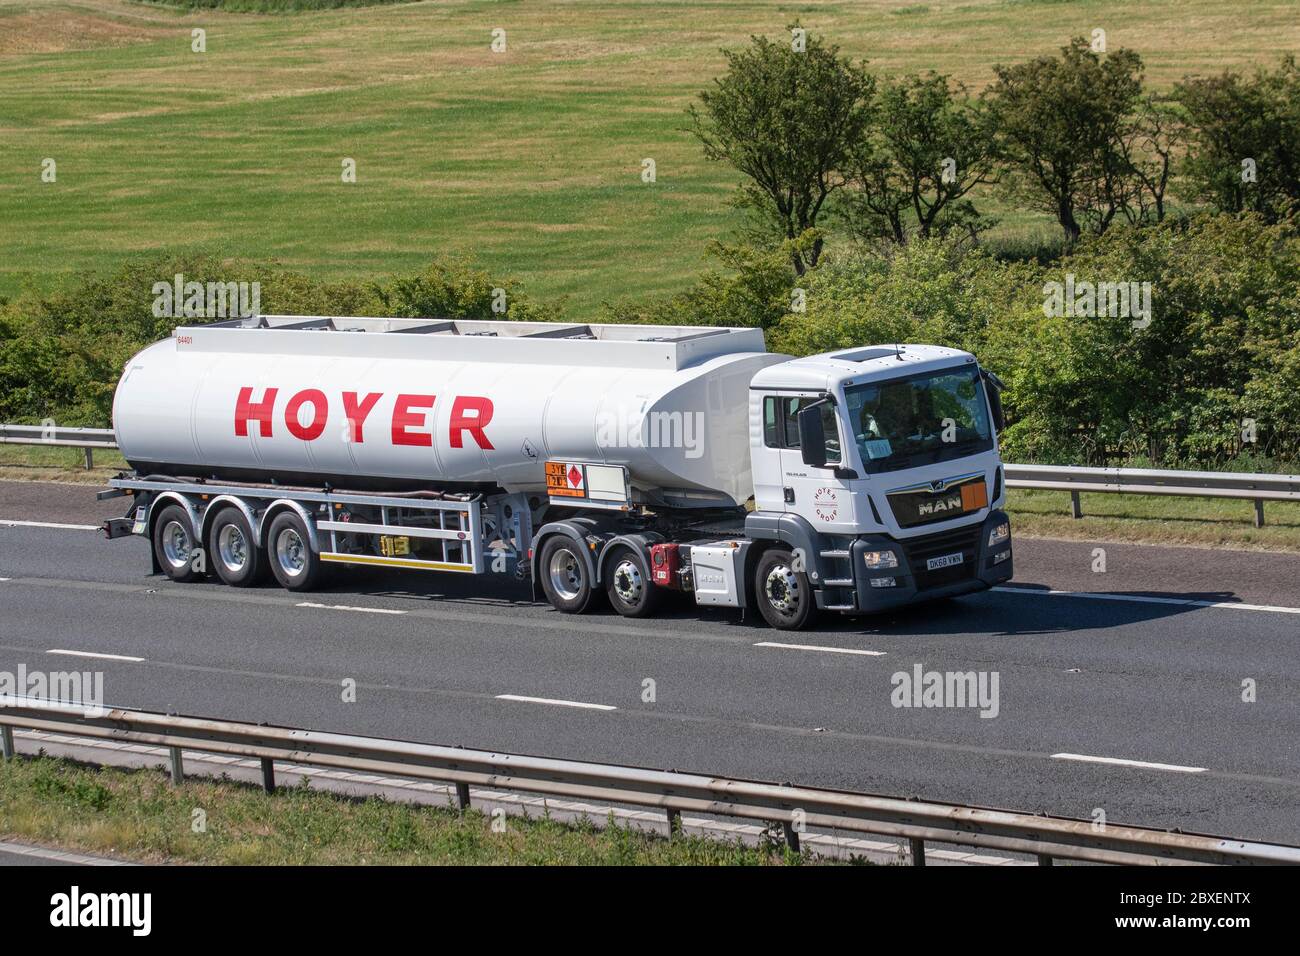 Hoyer Treibstofftransport Lieferwagen, HOYER UK Petrolog